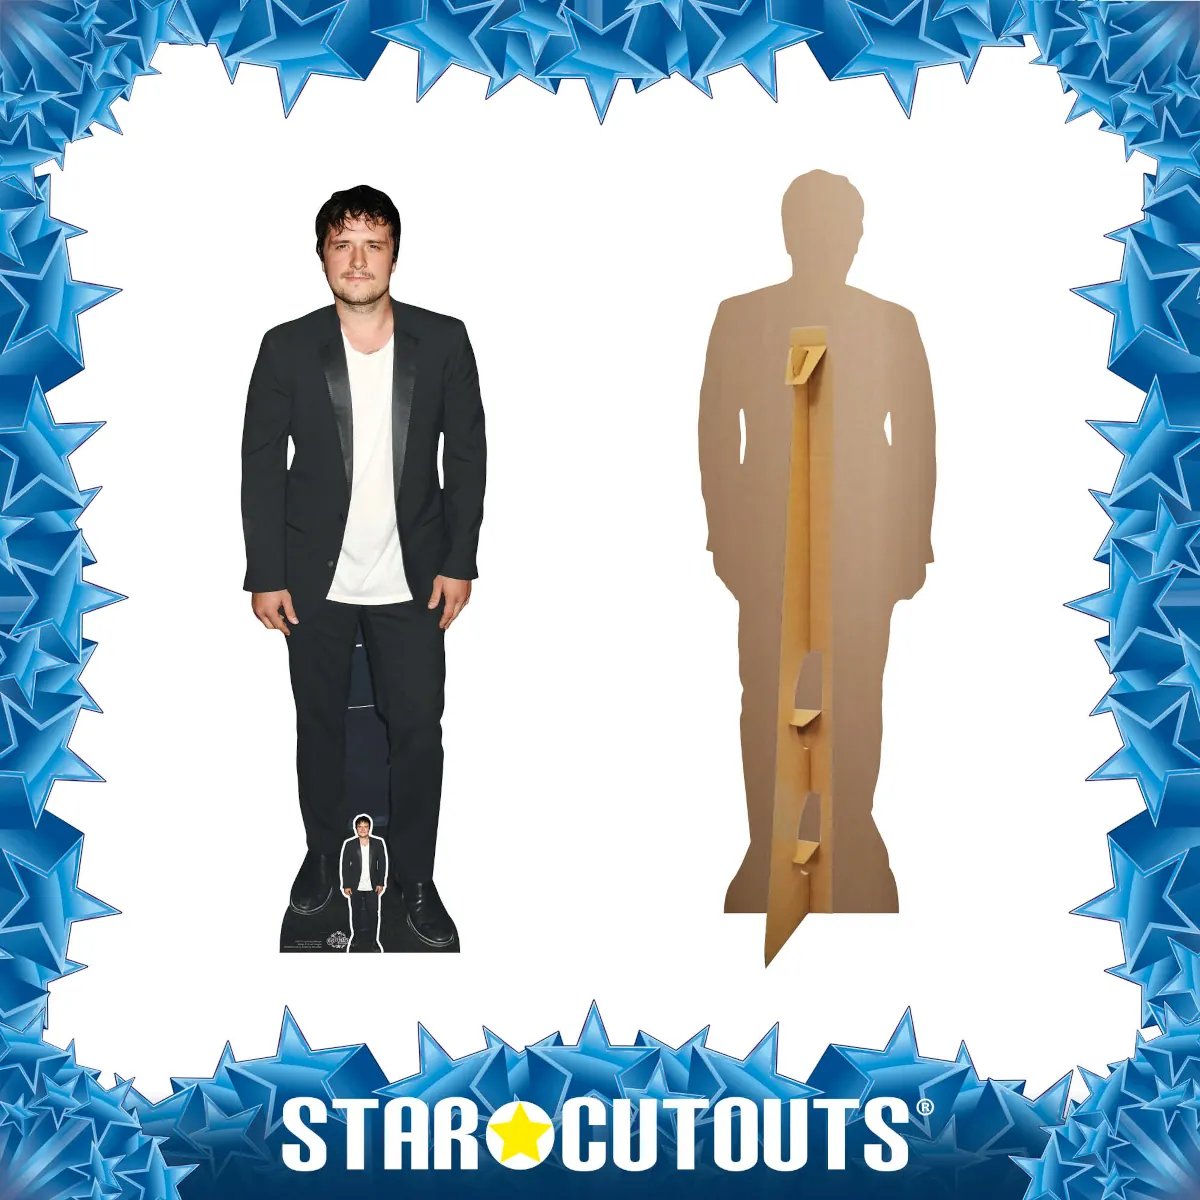 CS1121 Josh Hutcherson (American Actor) Lifesize + Mini Cardboard Cutout Standee Frame